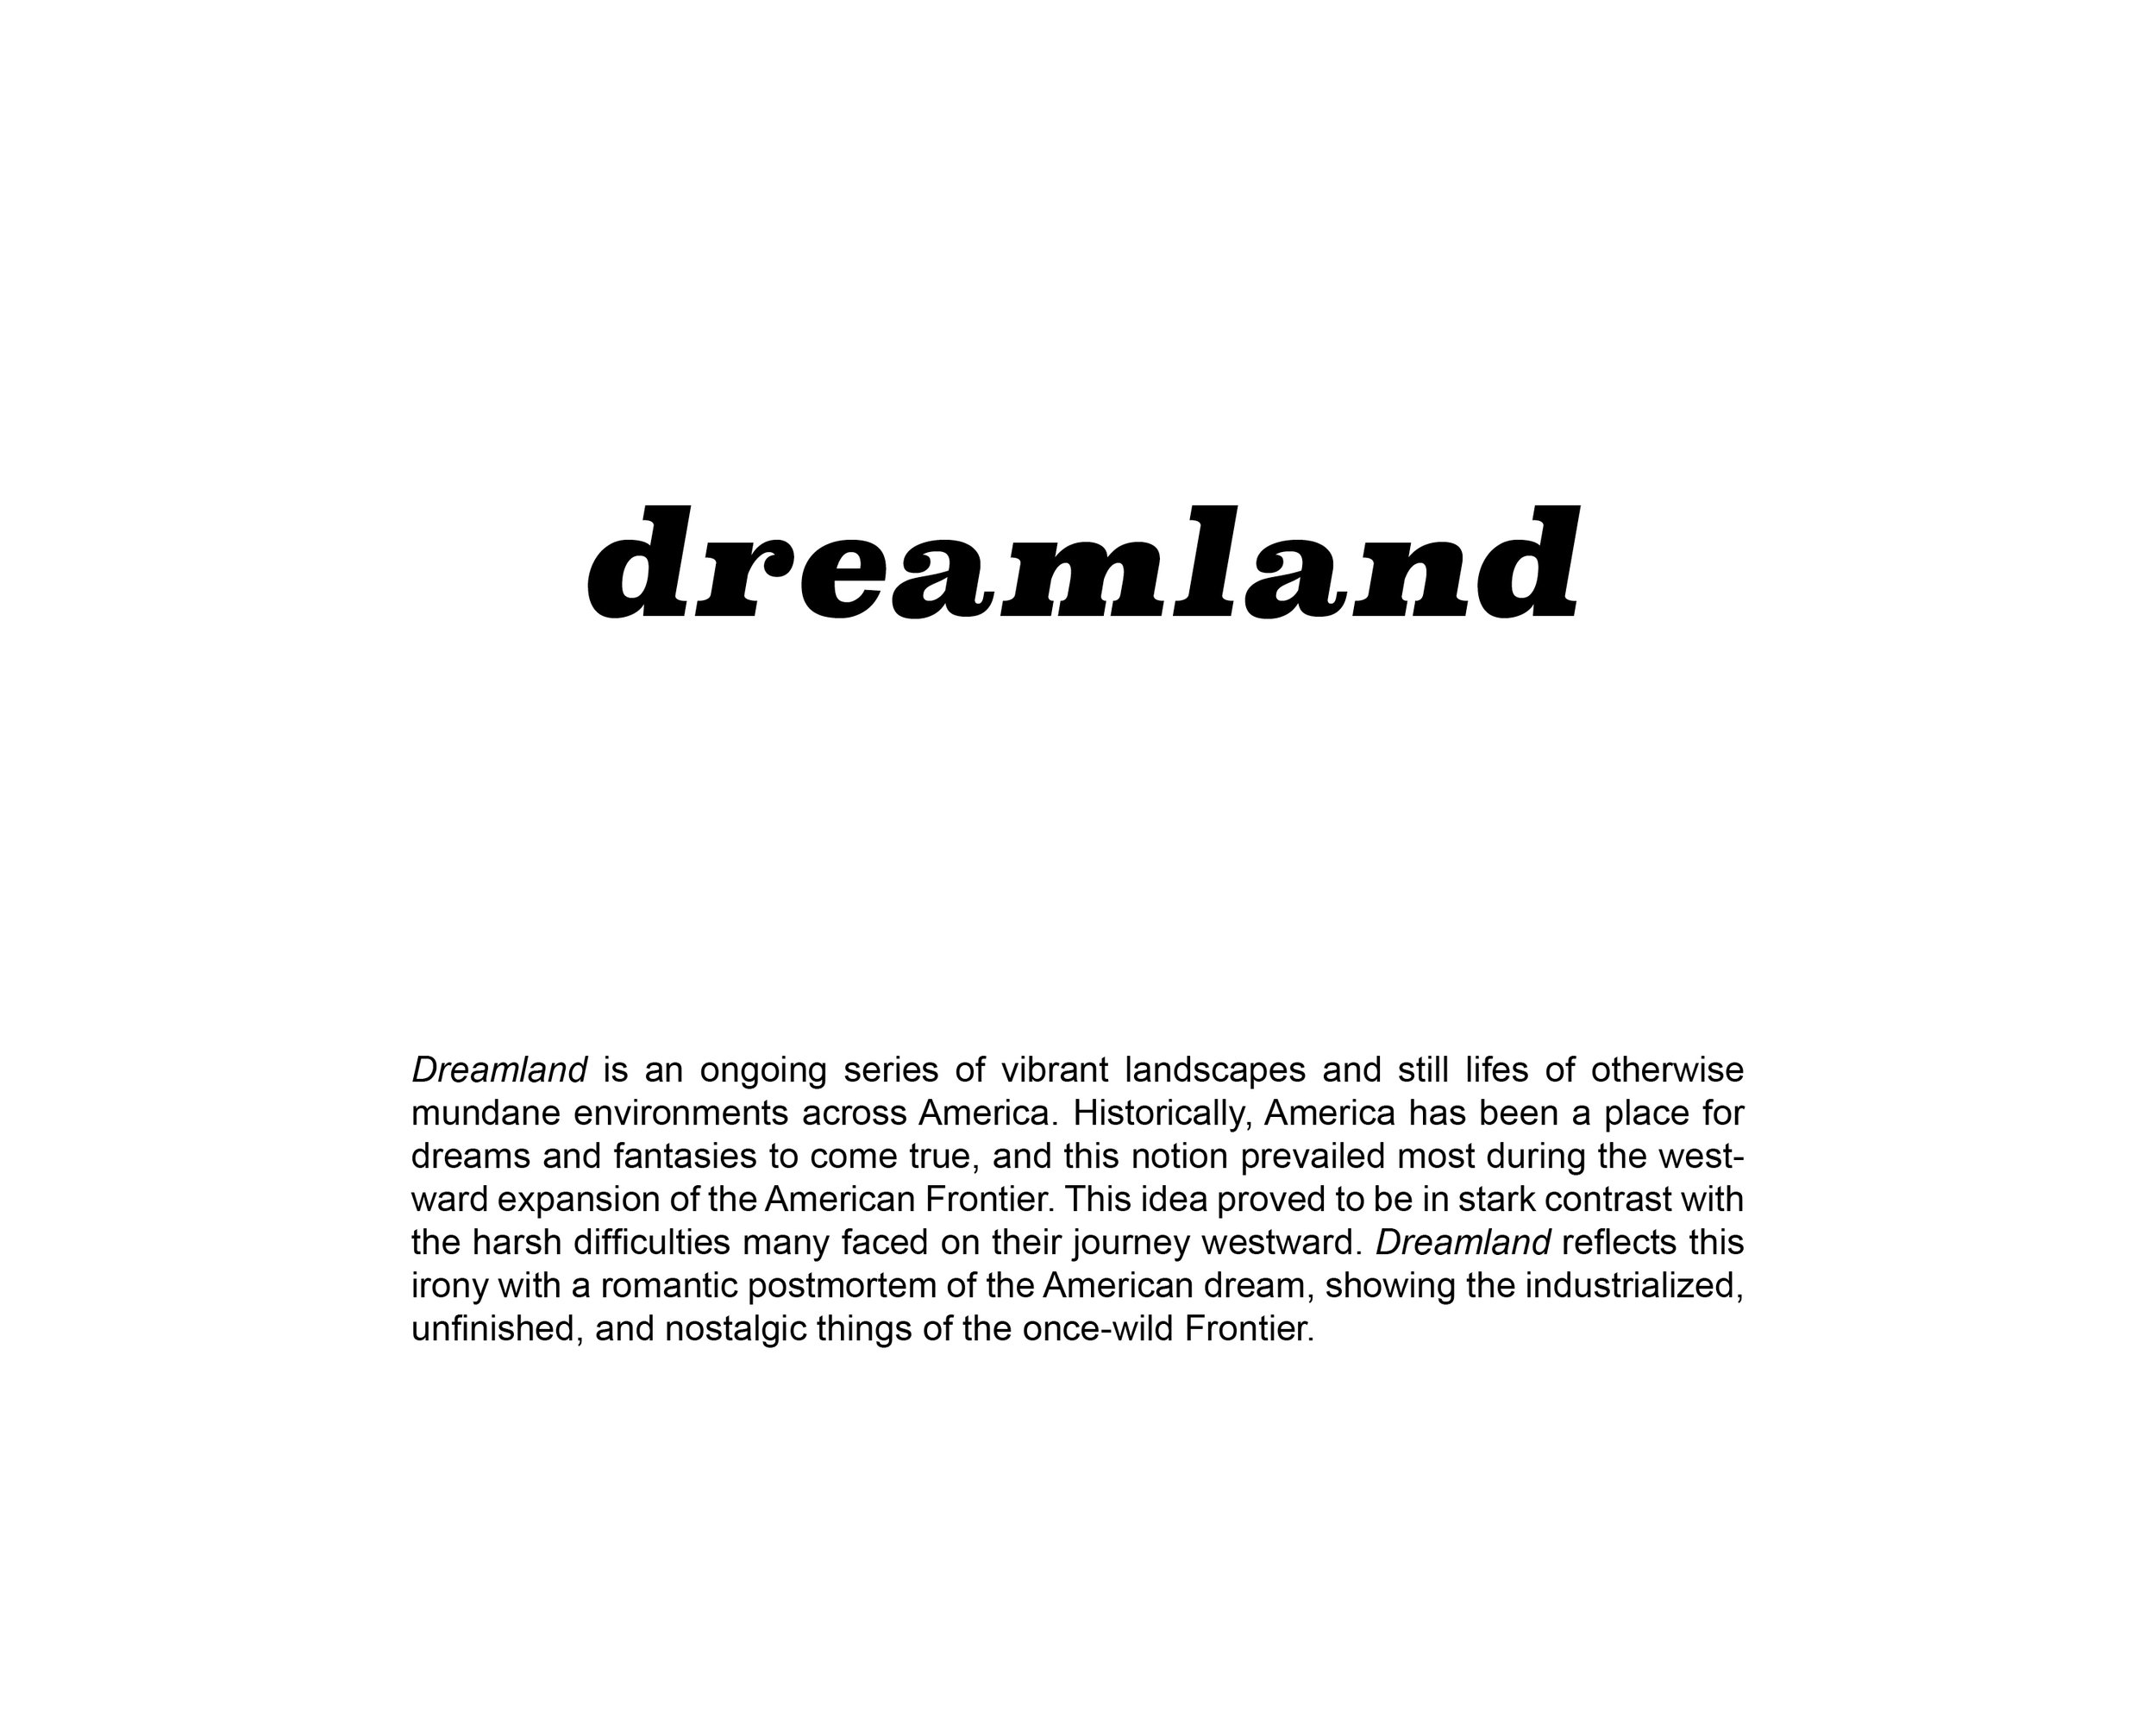 000_Dreamland.jpg